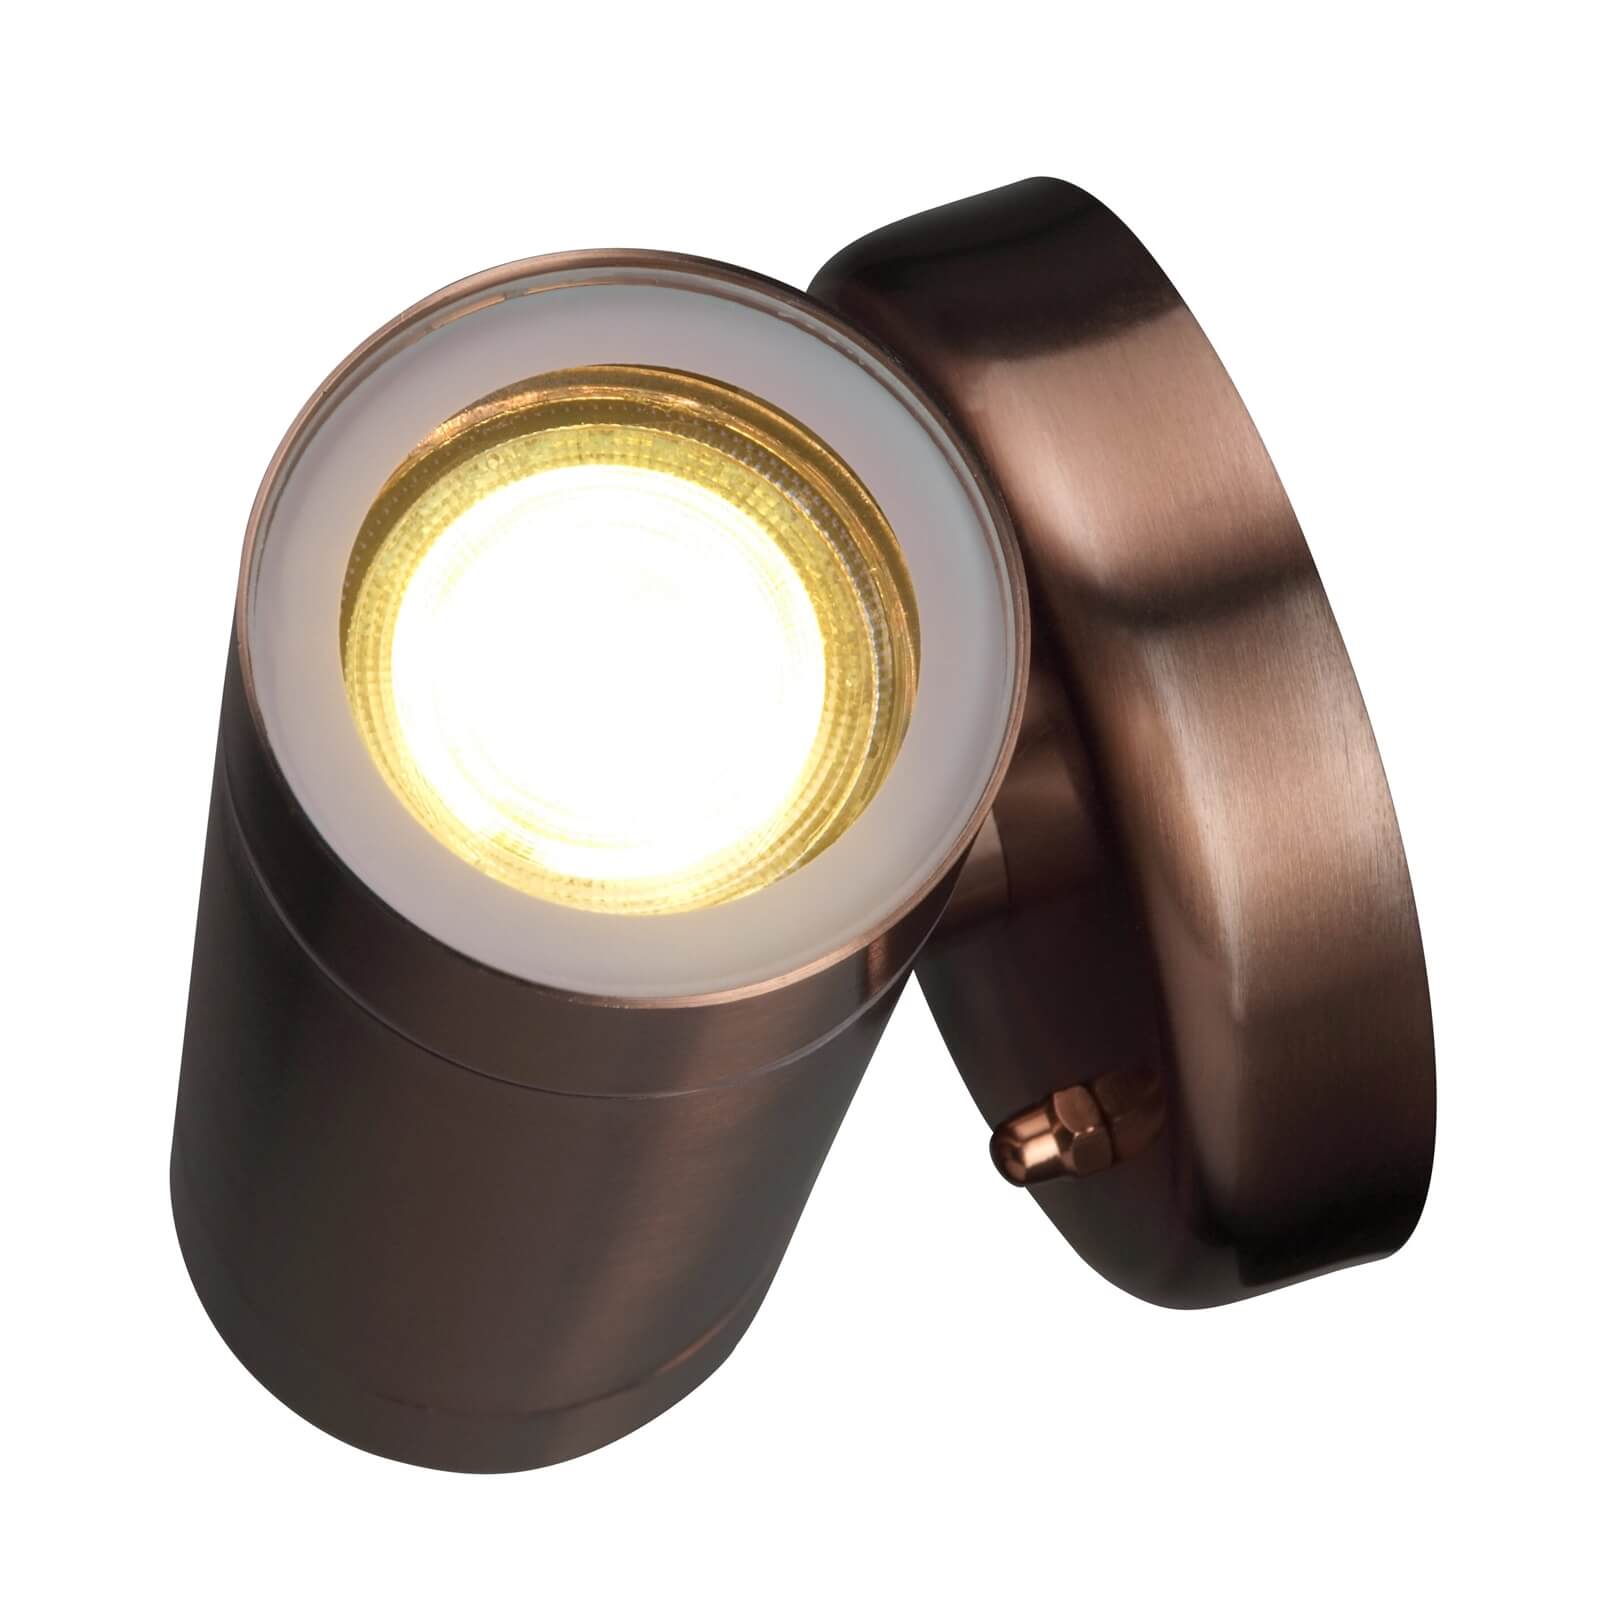 Lutec Rado Up & Down Outdoor Wall Light - Copper